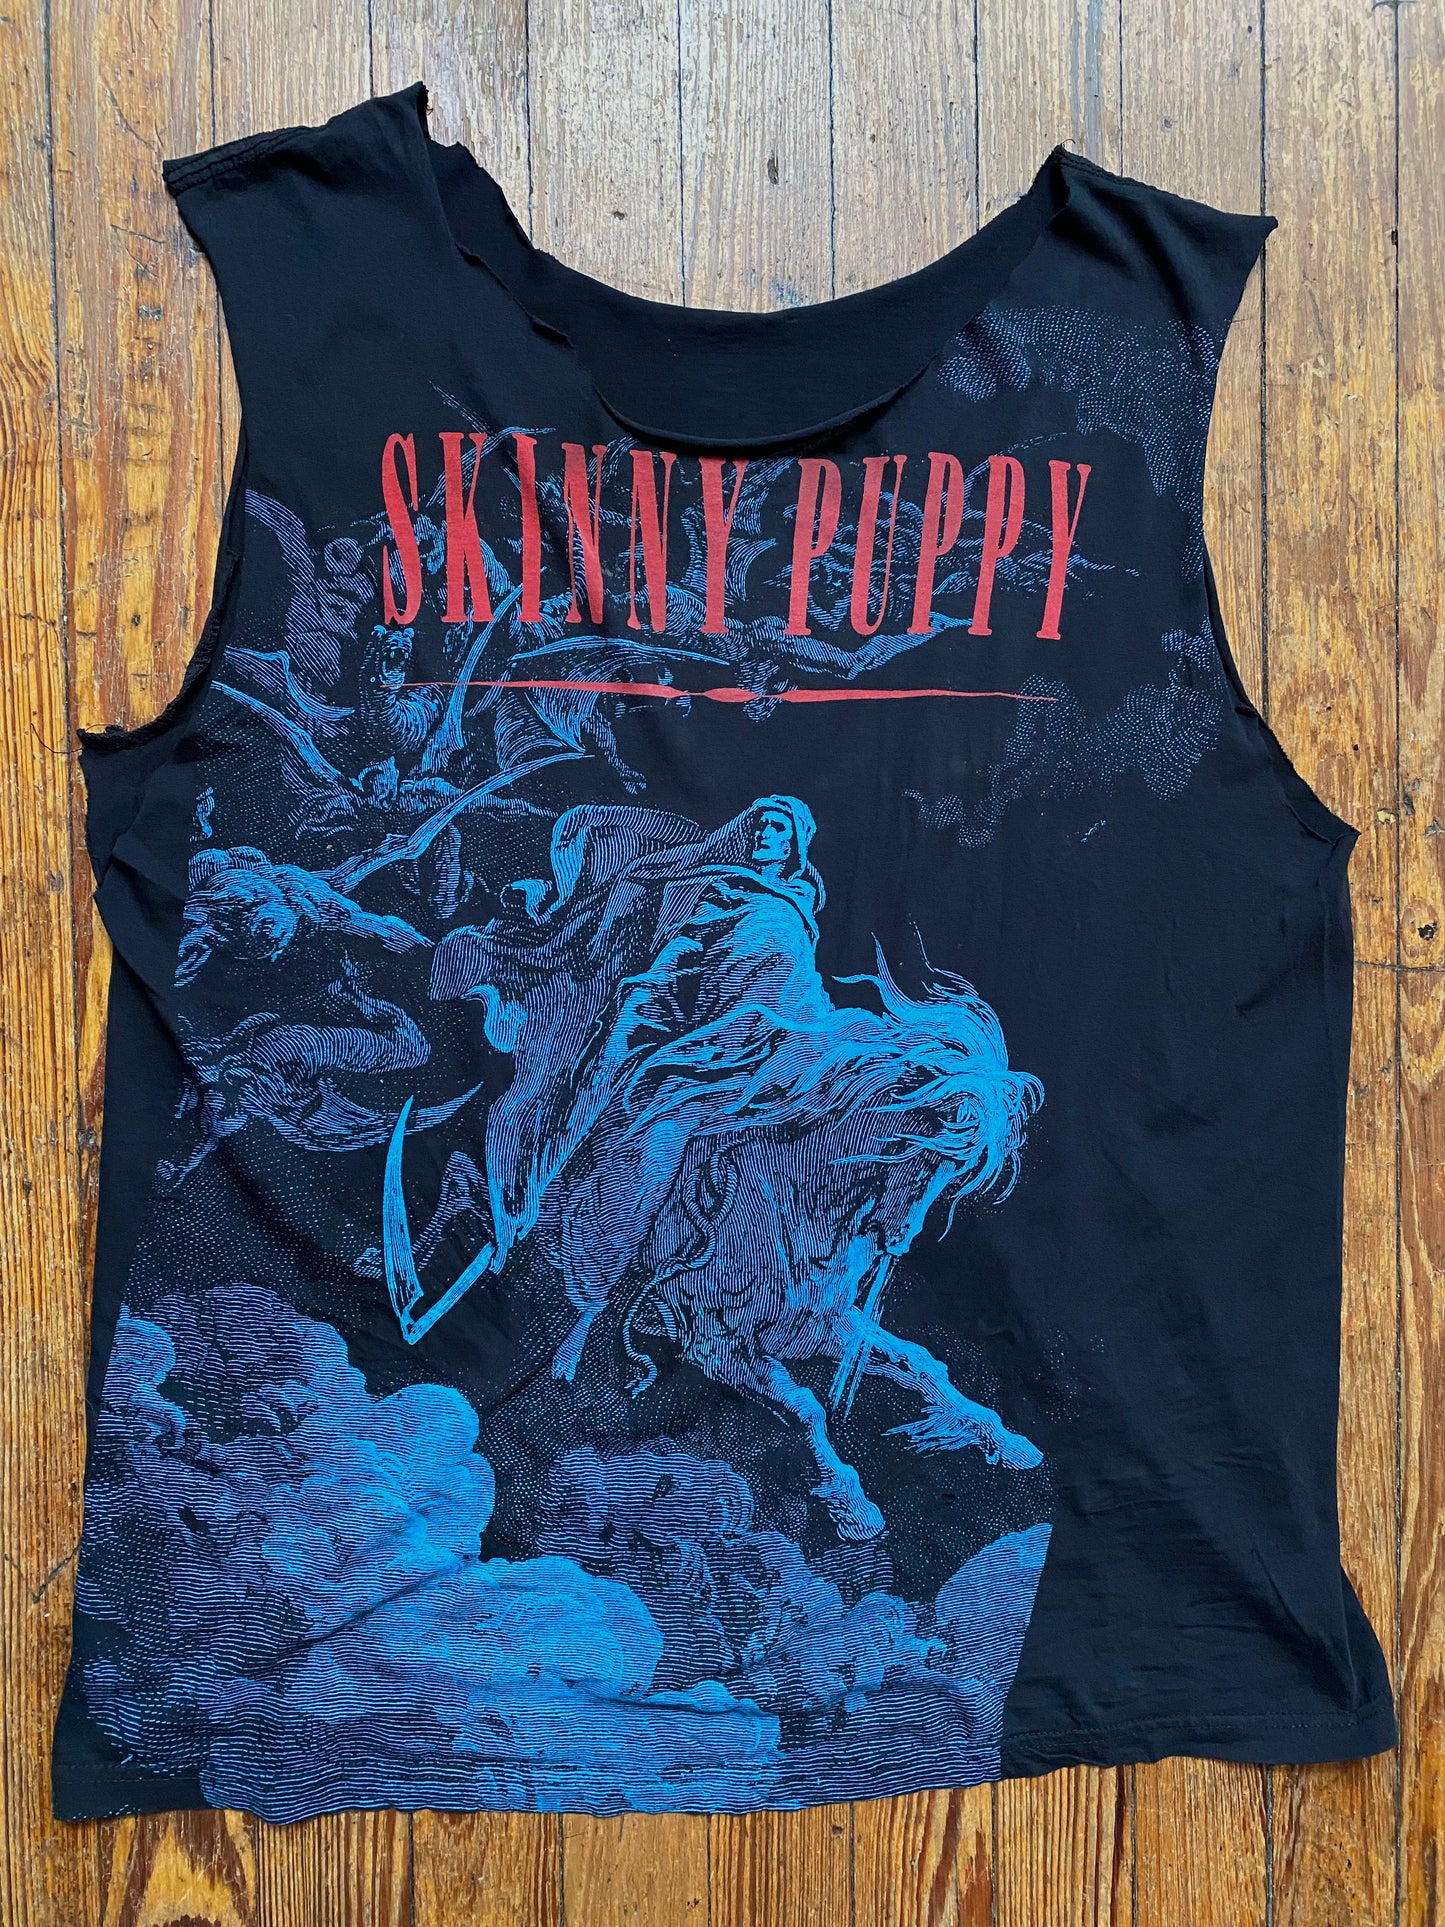 Vintage Skinny Puppy Chainsaw Gustave Doré Sleeveless T-Shirt